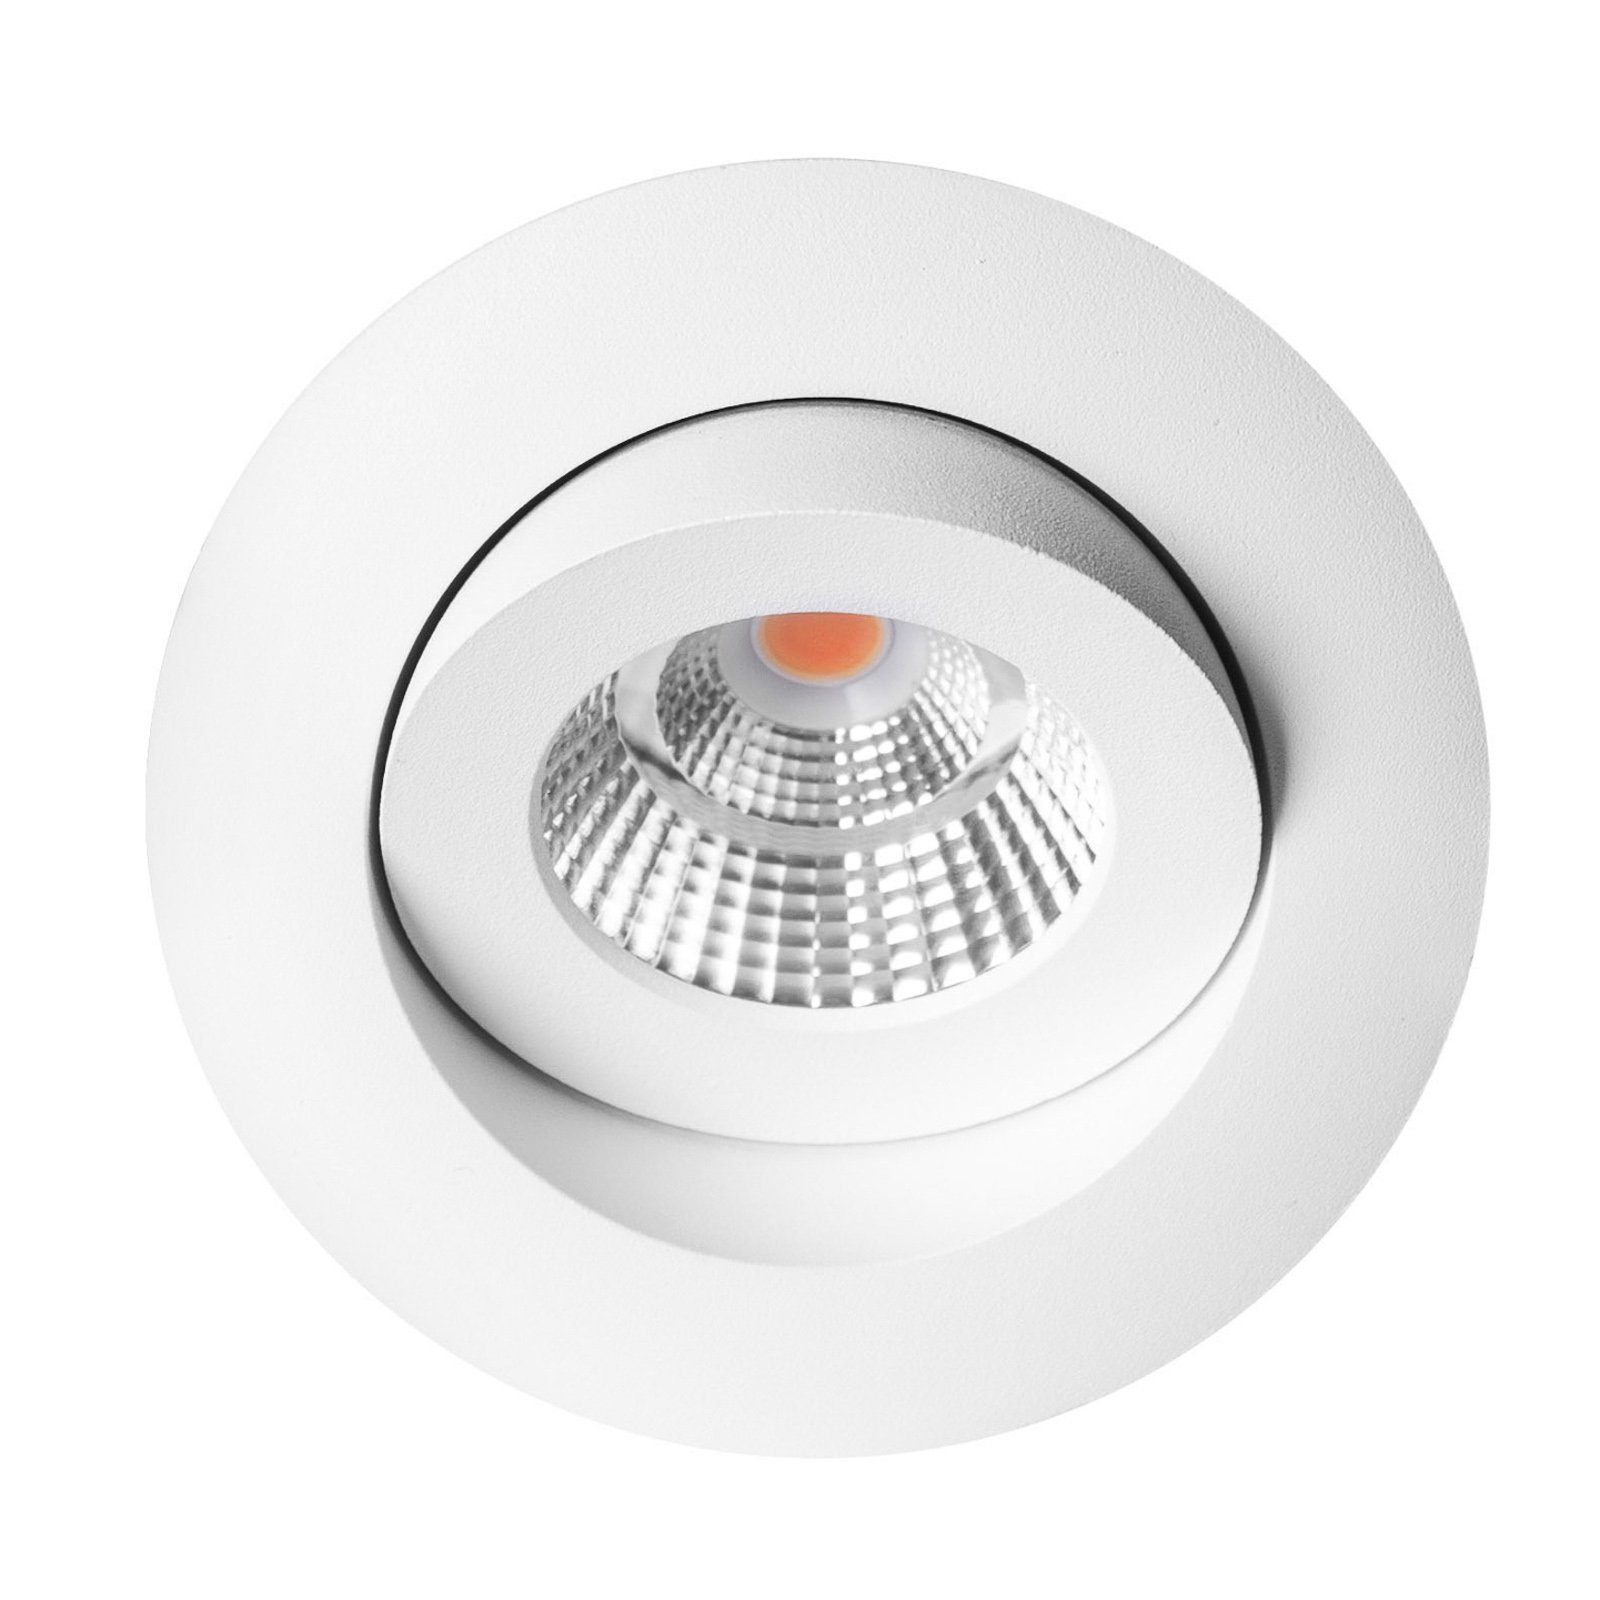 SLC One 360° LED inbouwlamp dim-to-warm wit